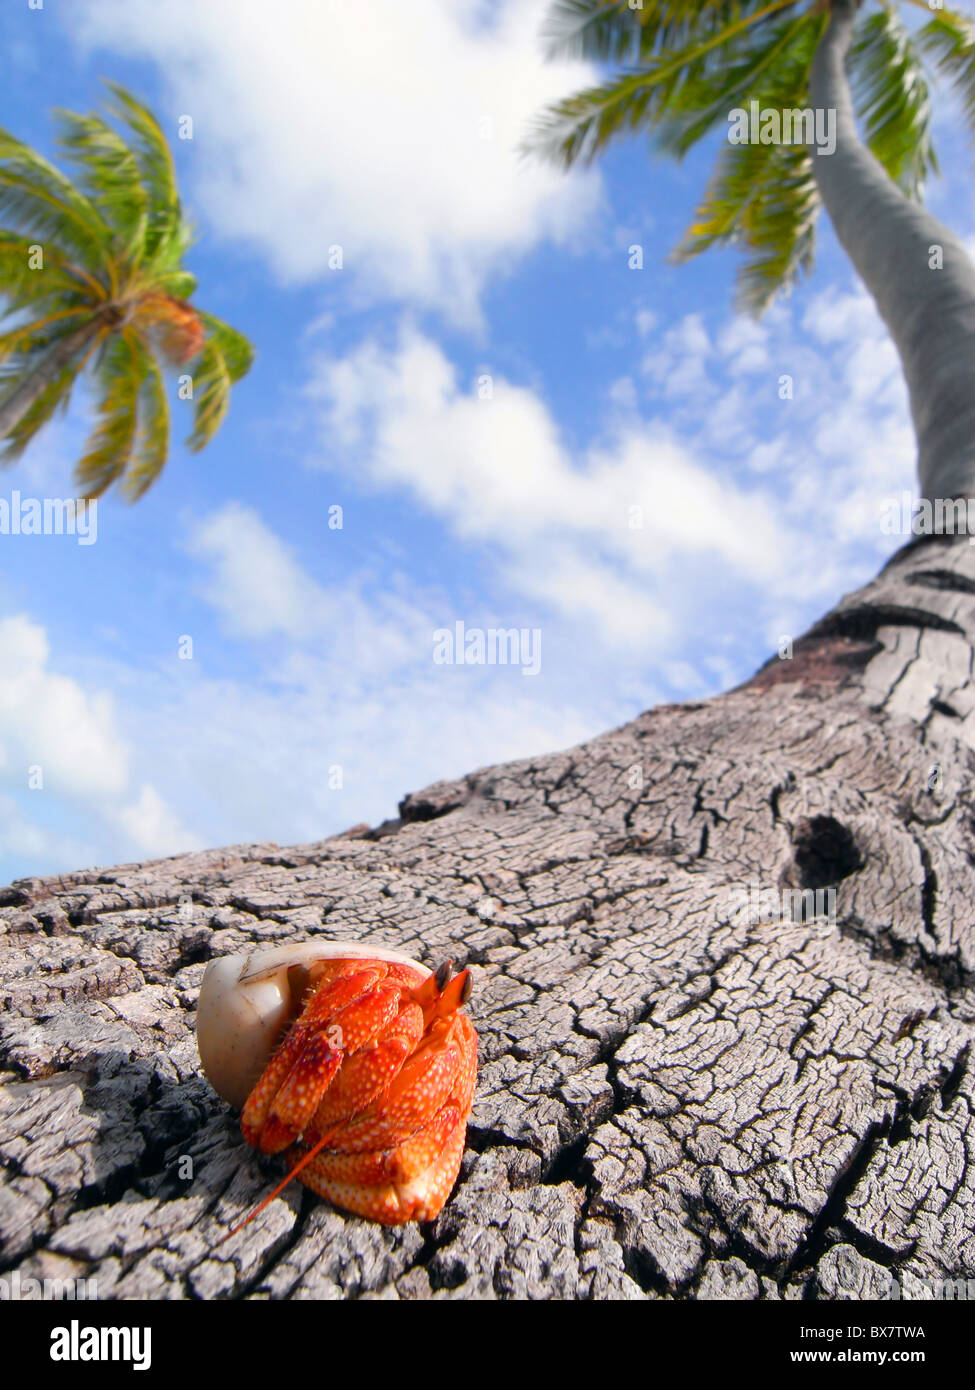 Il granchio eremita (variabilis sp.) sulla base della palma da cocco (Cocos nucifera), West Island, il Cocos Keeling, Oceano Indiano Foto Stock